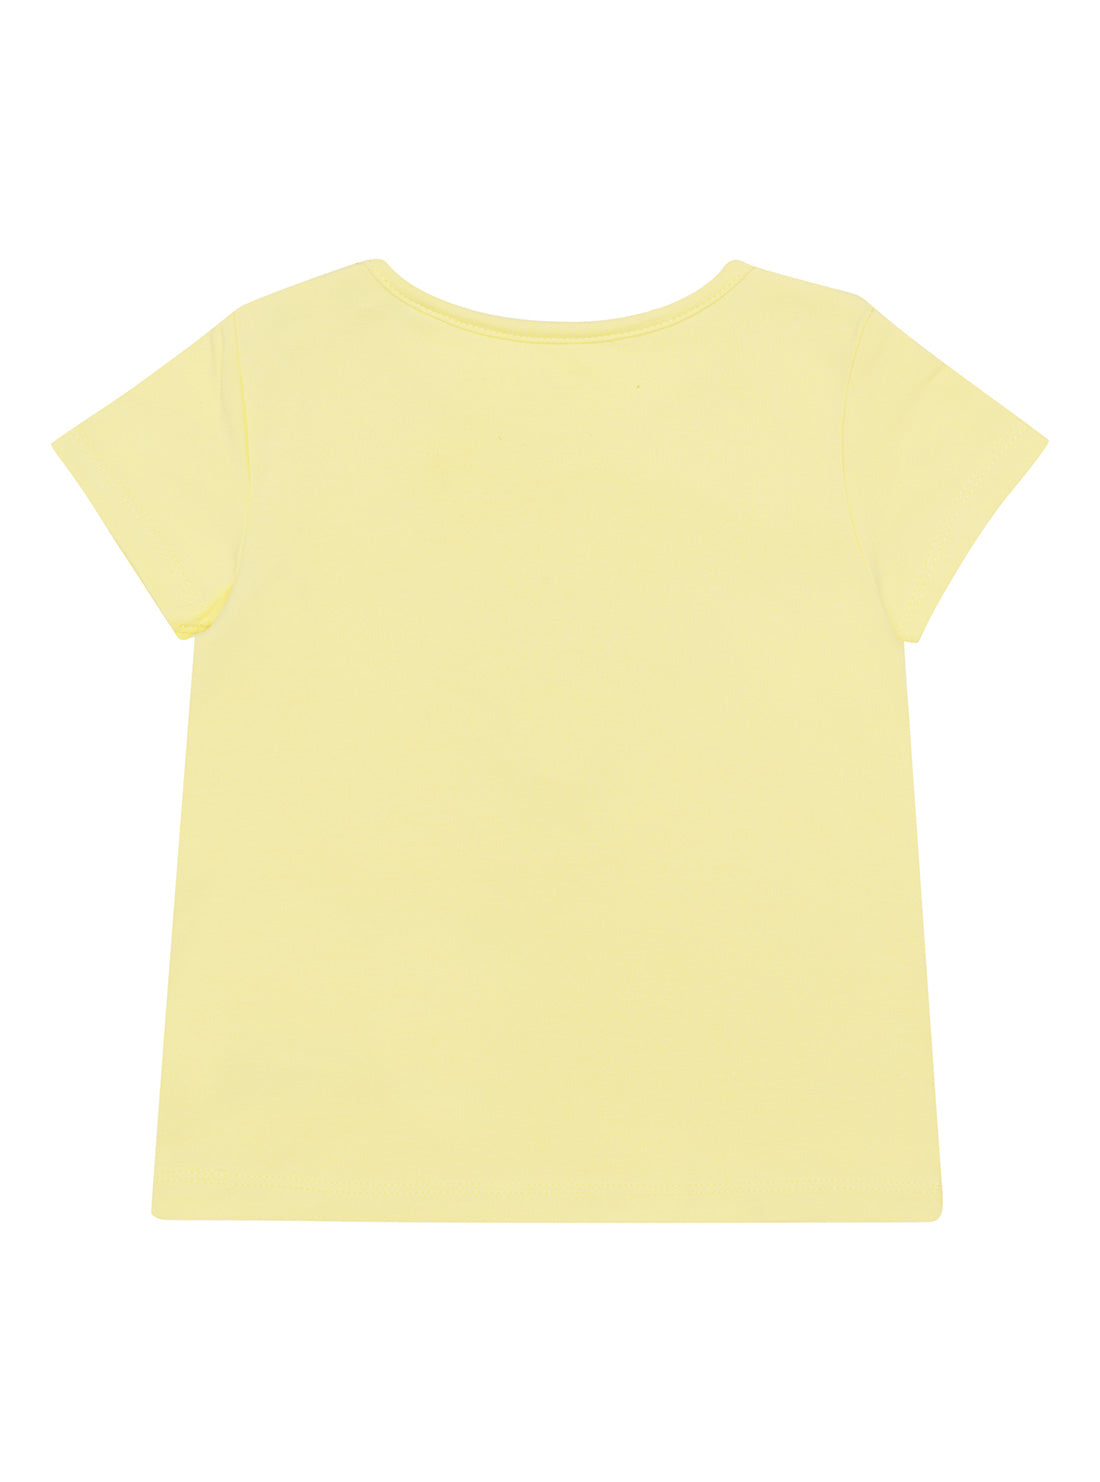 Yello Floral Logo T-Shirt (6-24m)